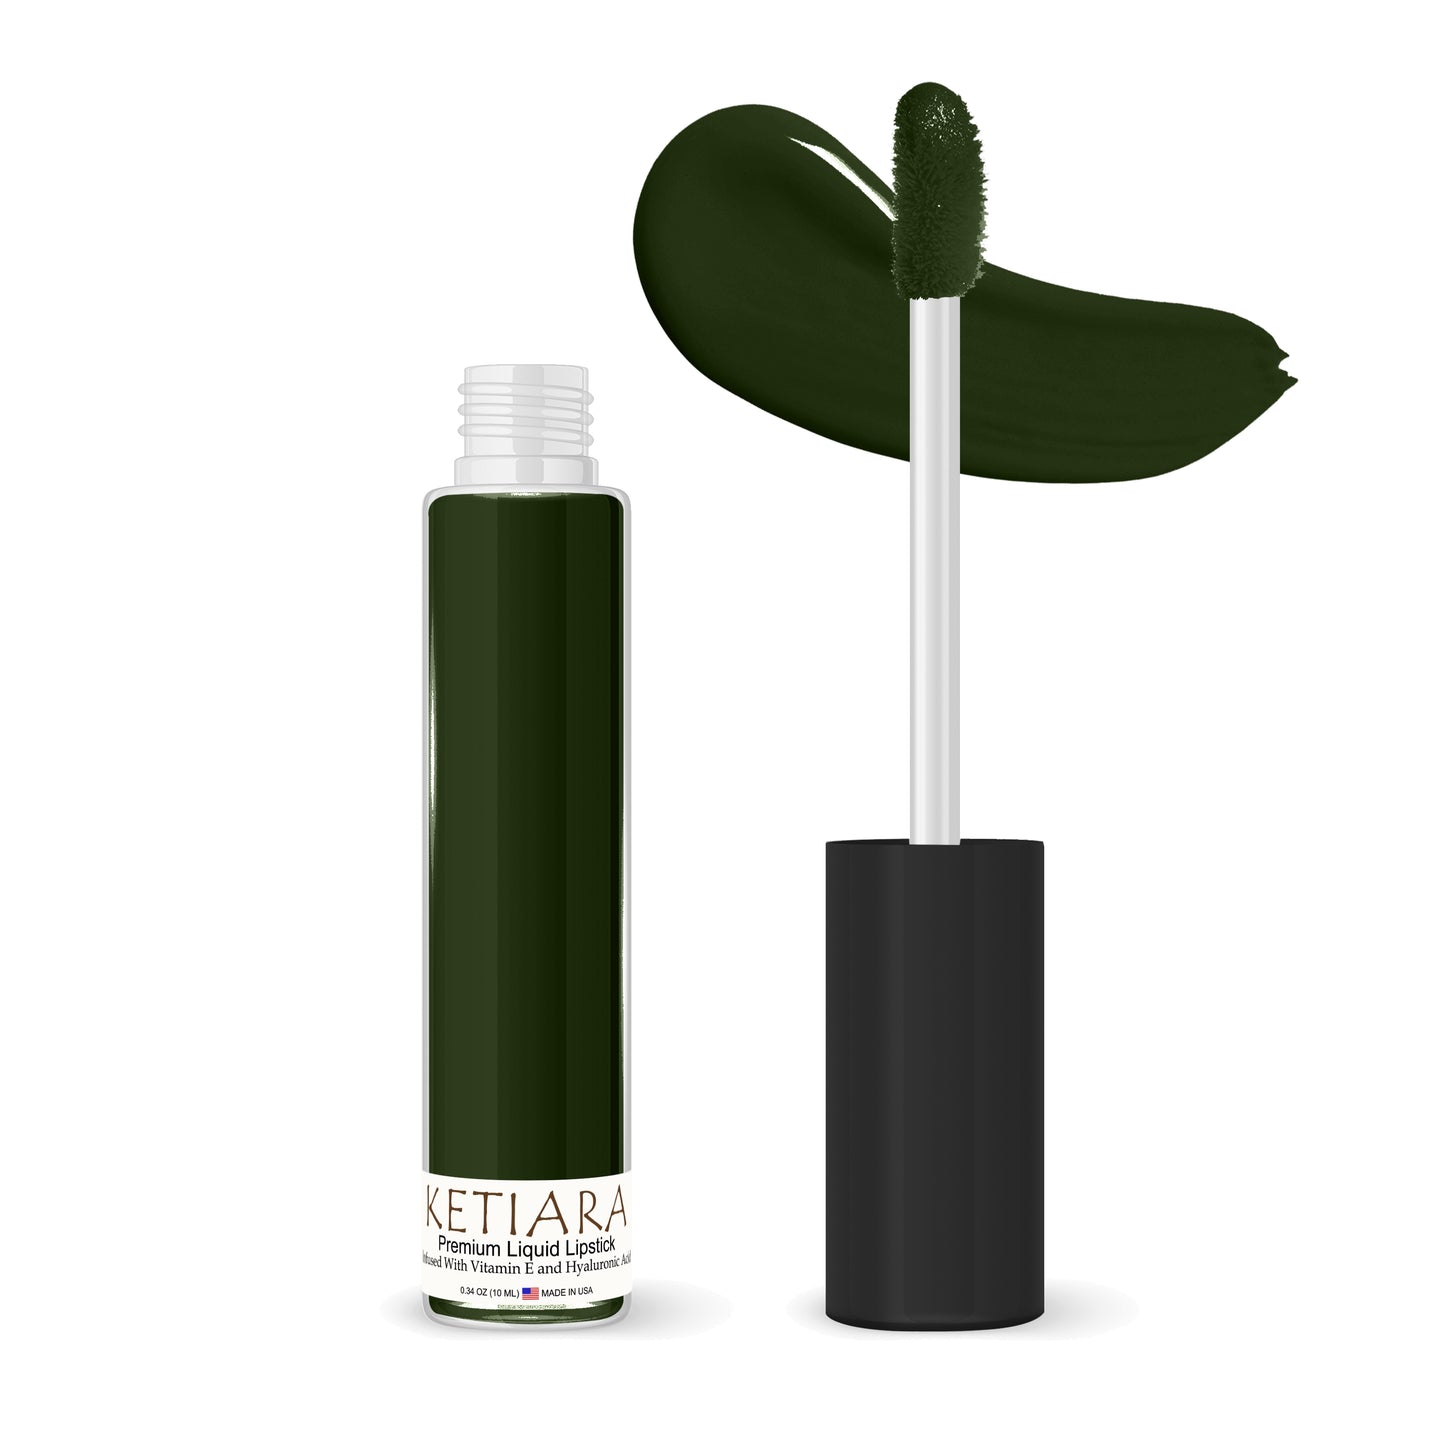 Ketiara Premium Full Coverage Foliage Liquid Lipstick Infused With Hyaluronic Acid, 10 ml